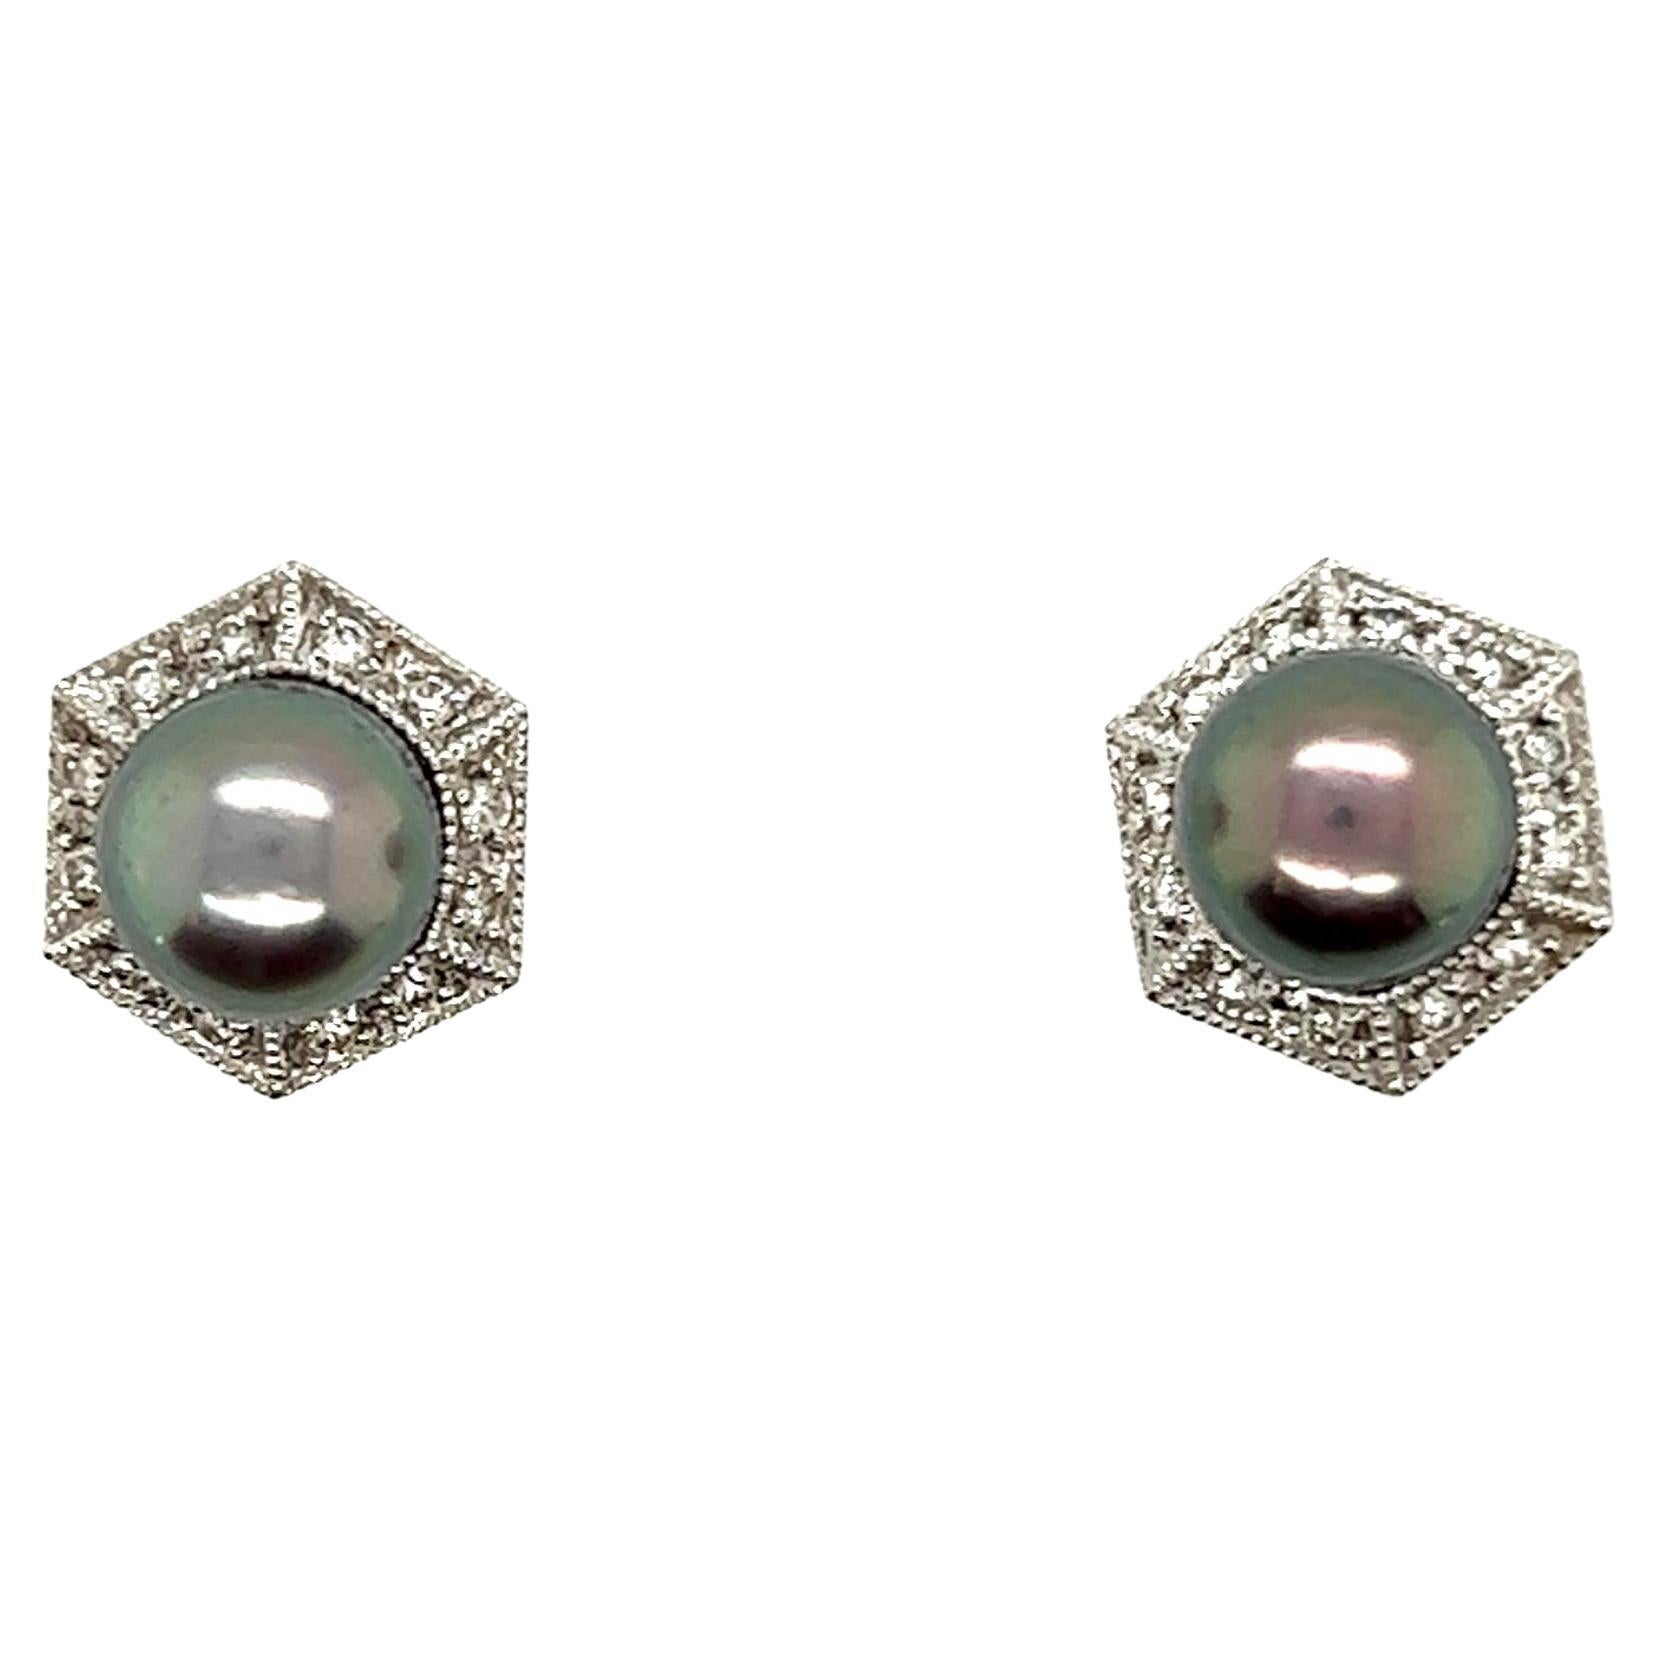 14kt 7mm Black Pearl and Diamond Earrings 